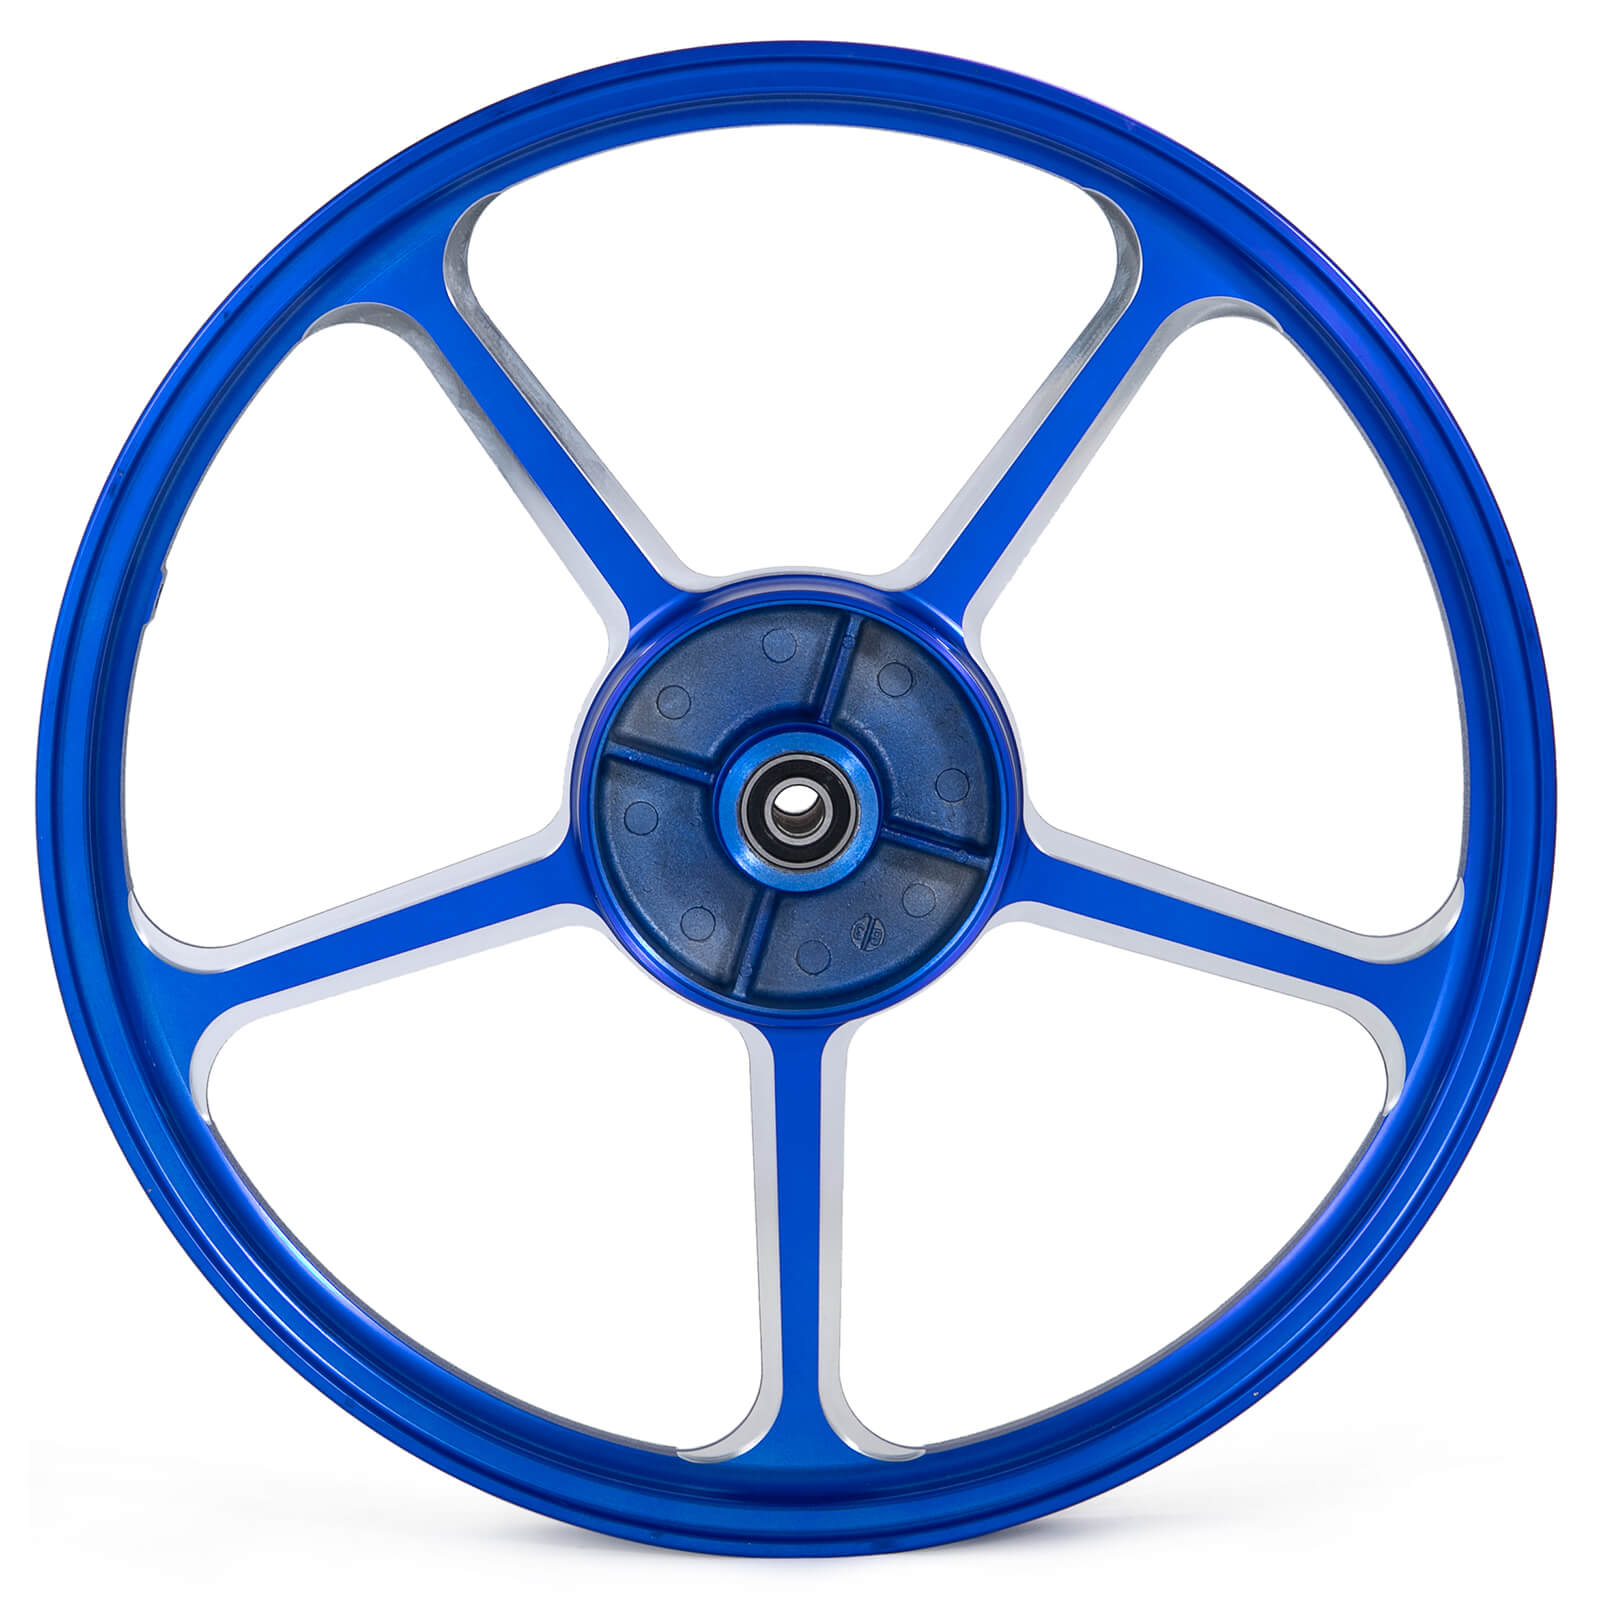 Factory direct hot sale sportbike wheels 2021 motorcycle custom wheel rims 17 inch for Y15ZR LC135 Y125ZR